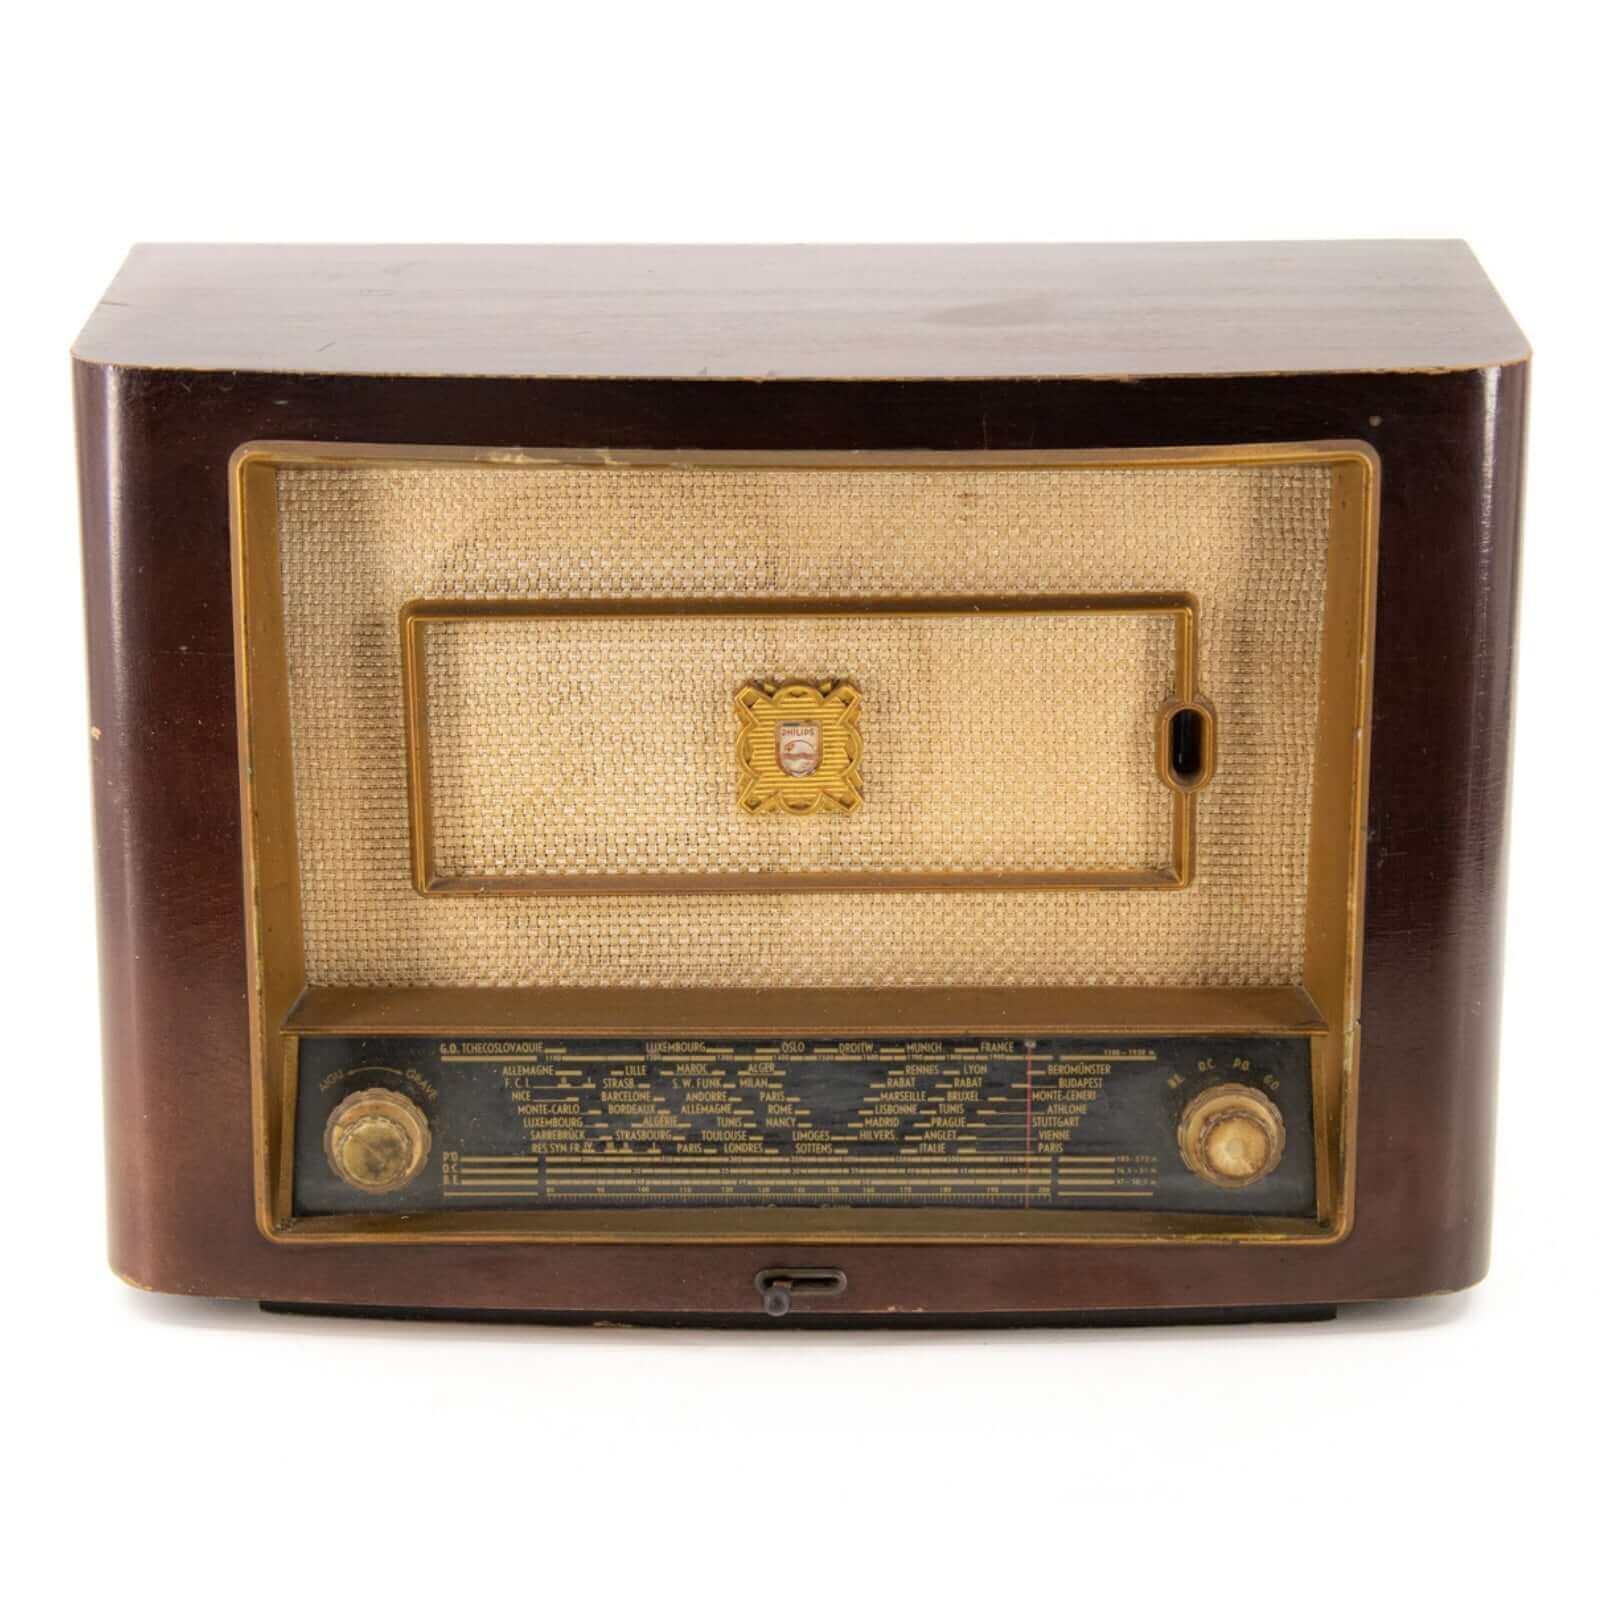 Radio Bluetooth Philips Vintage 50's enceinte connectée bluetooth haut de gamme prodige radio vintage design